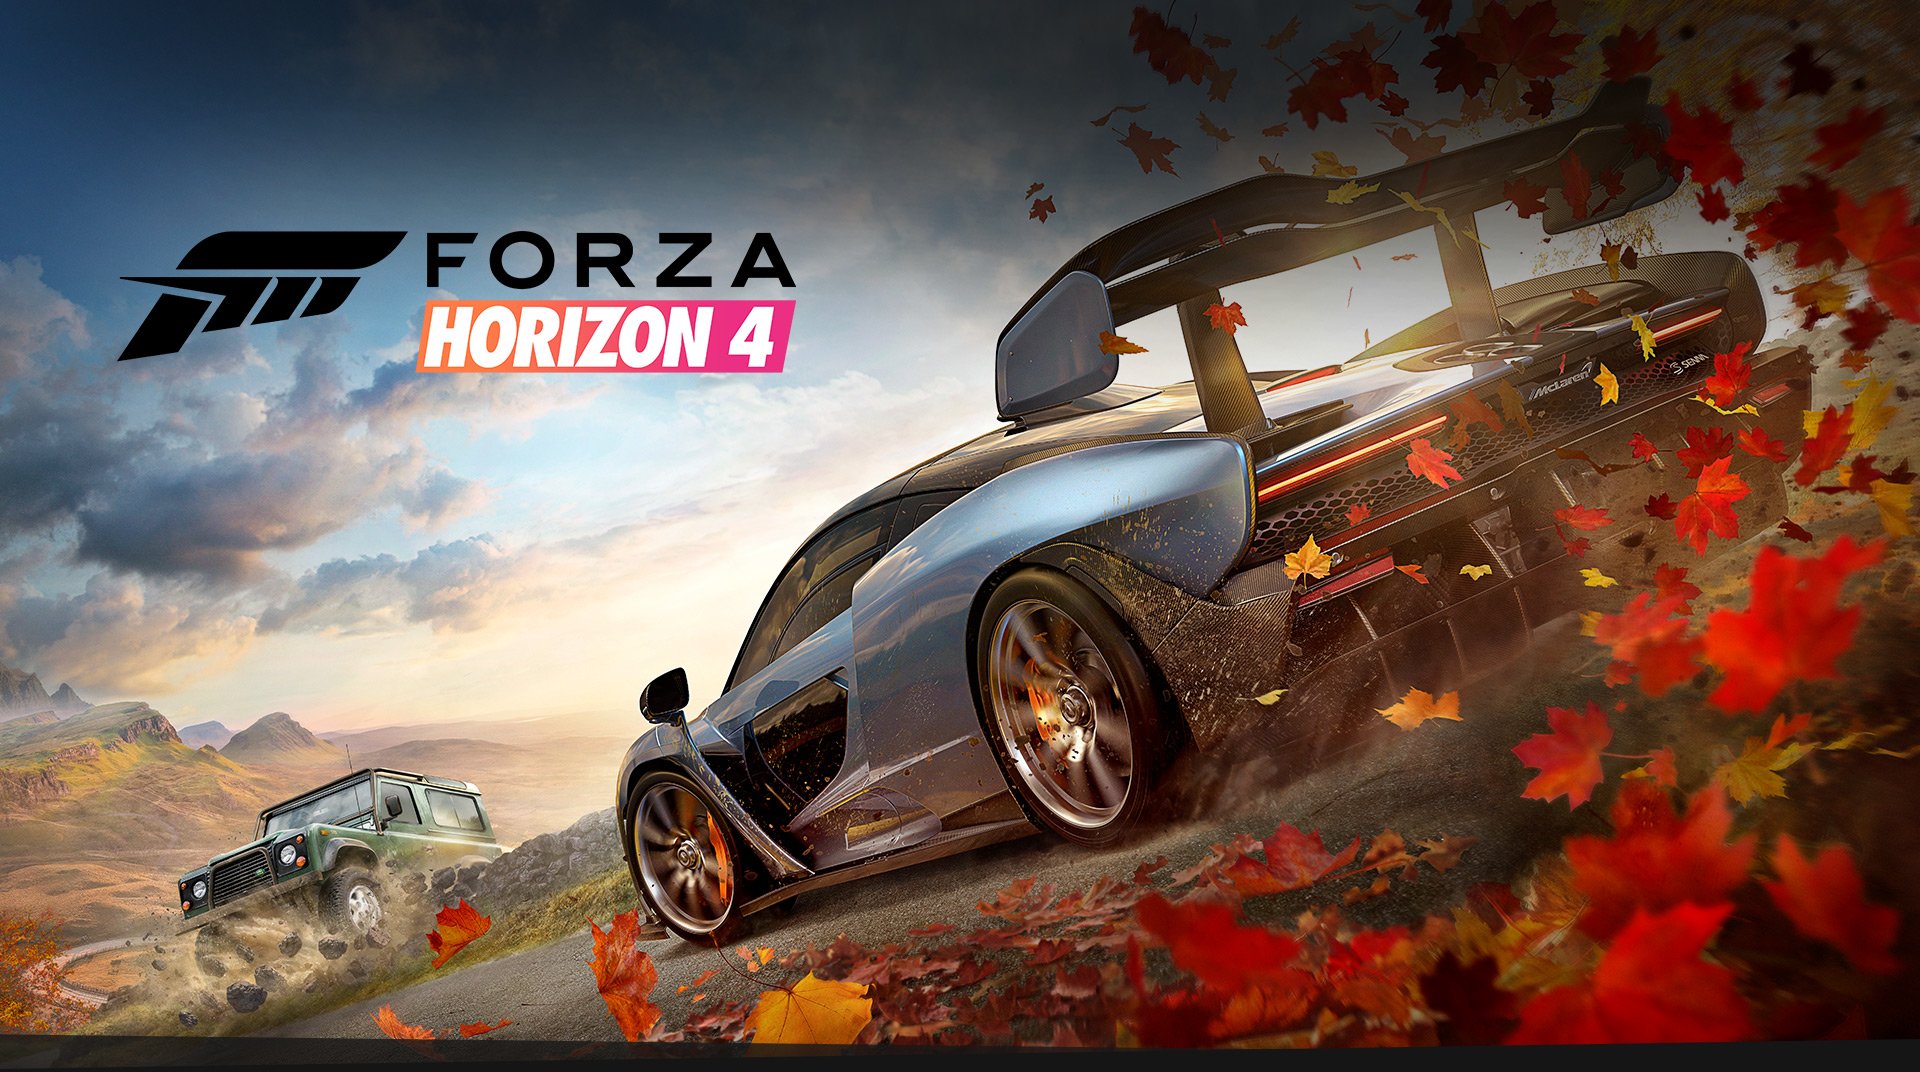 Forza Horizon 4 PC Version Full Game Free Download